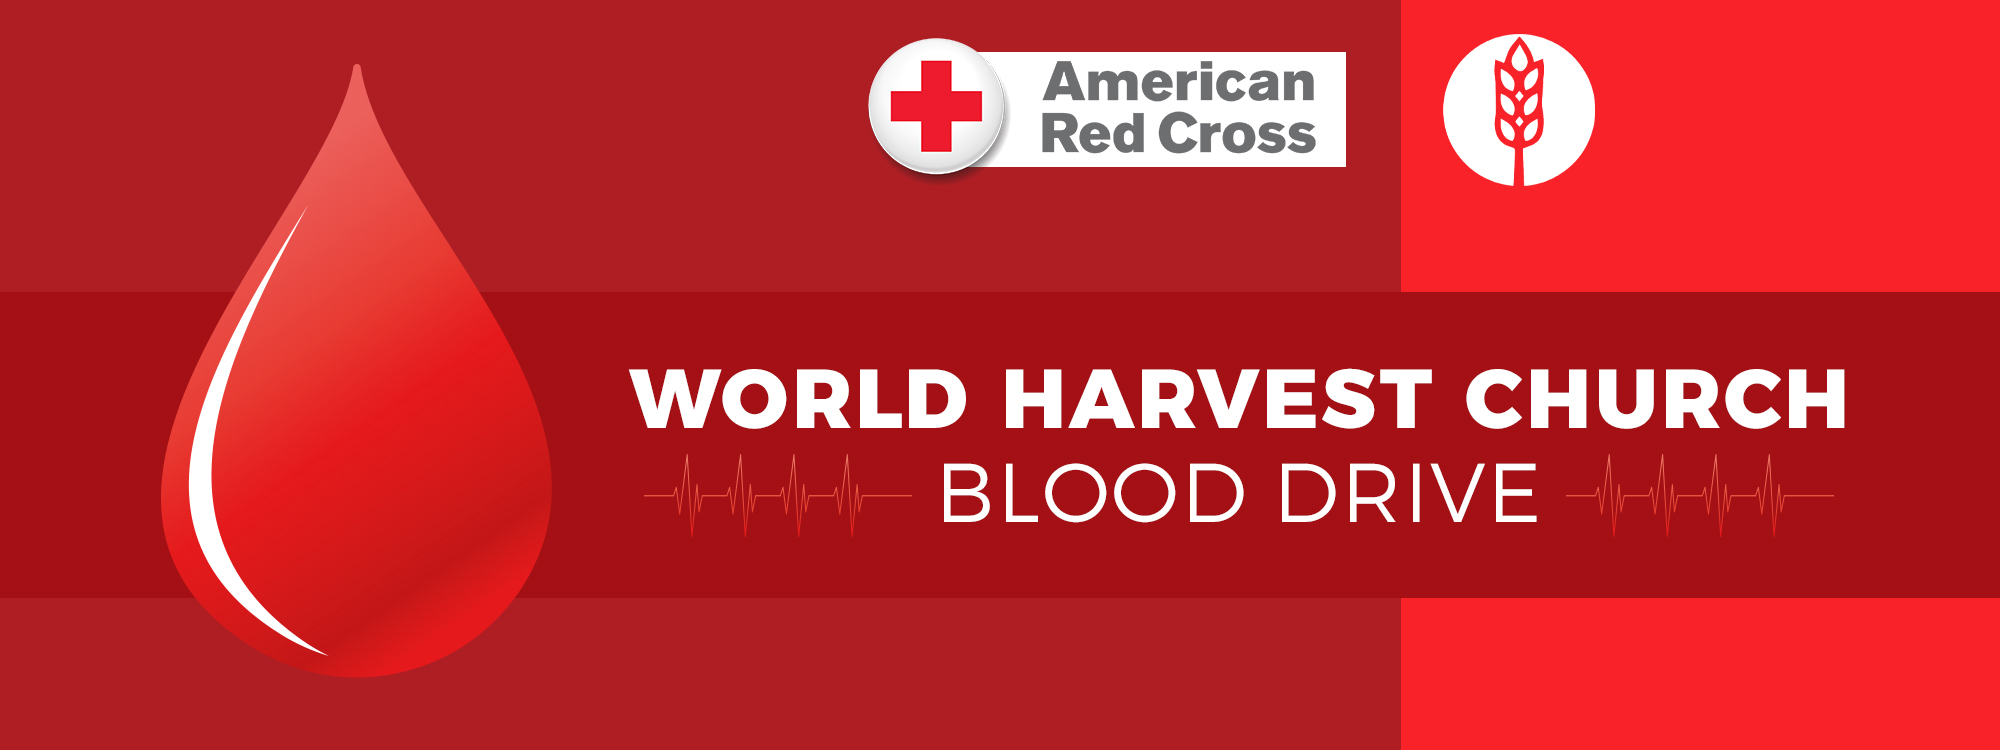 American Red Cross World Harvest Church Blood Drive